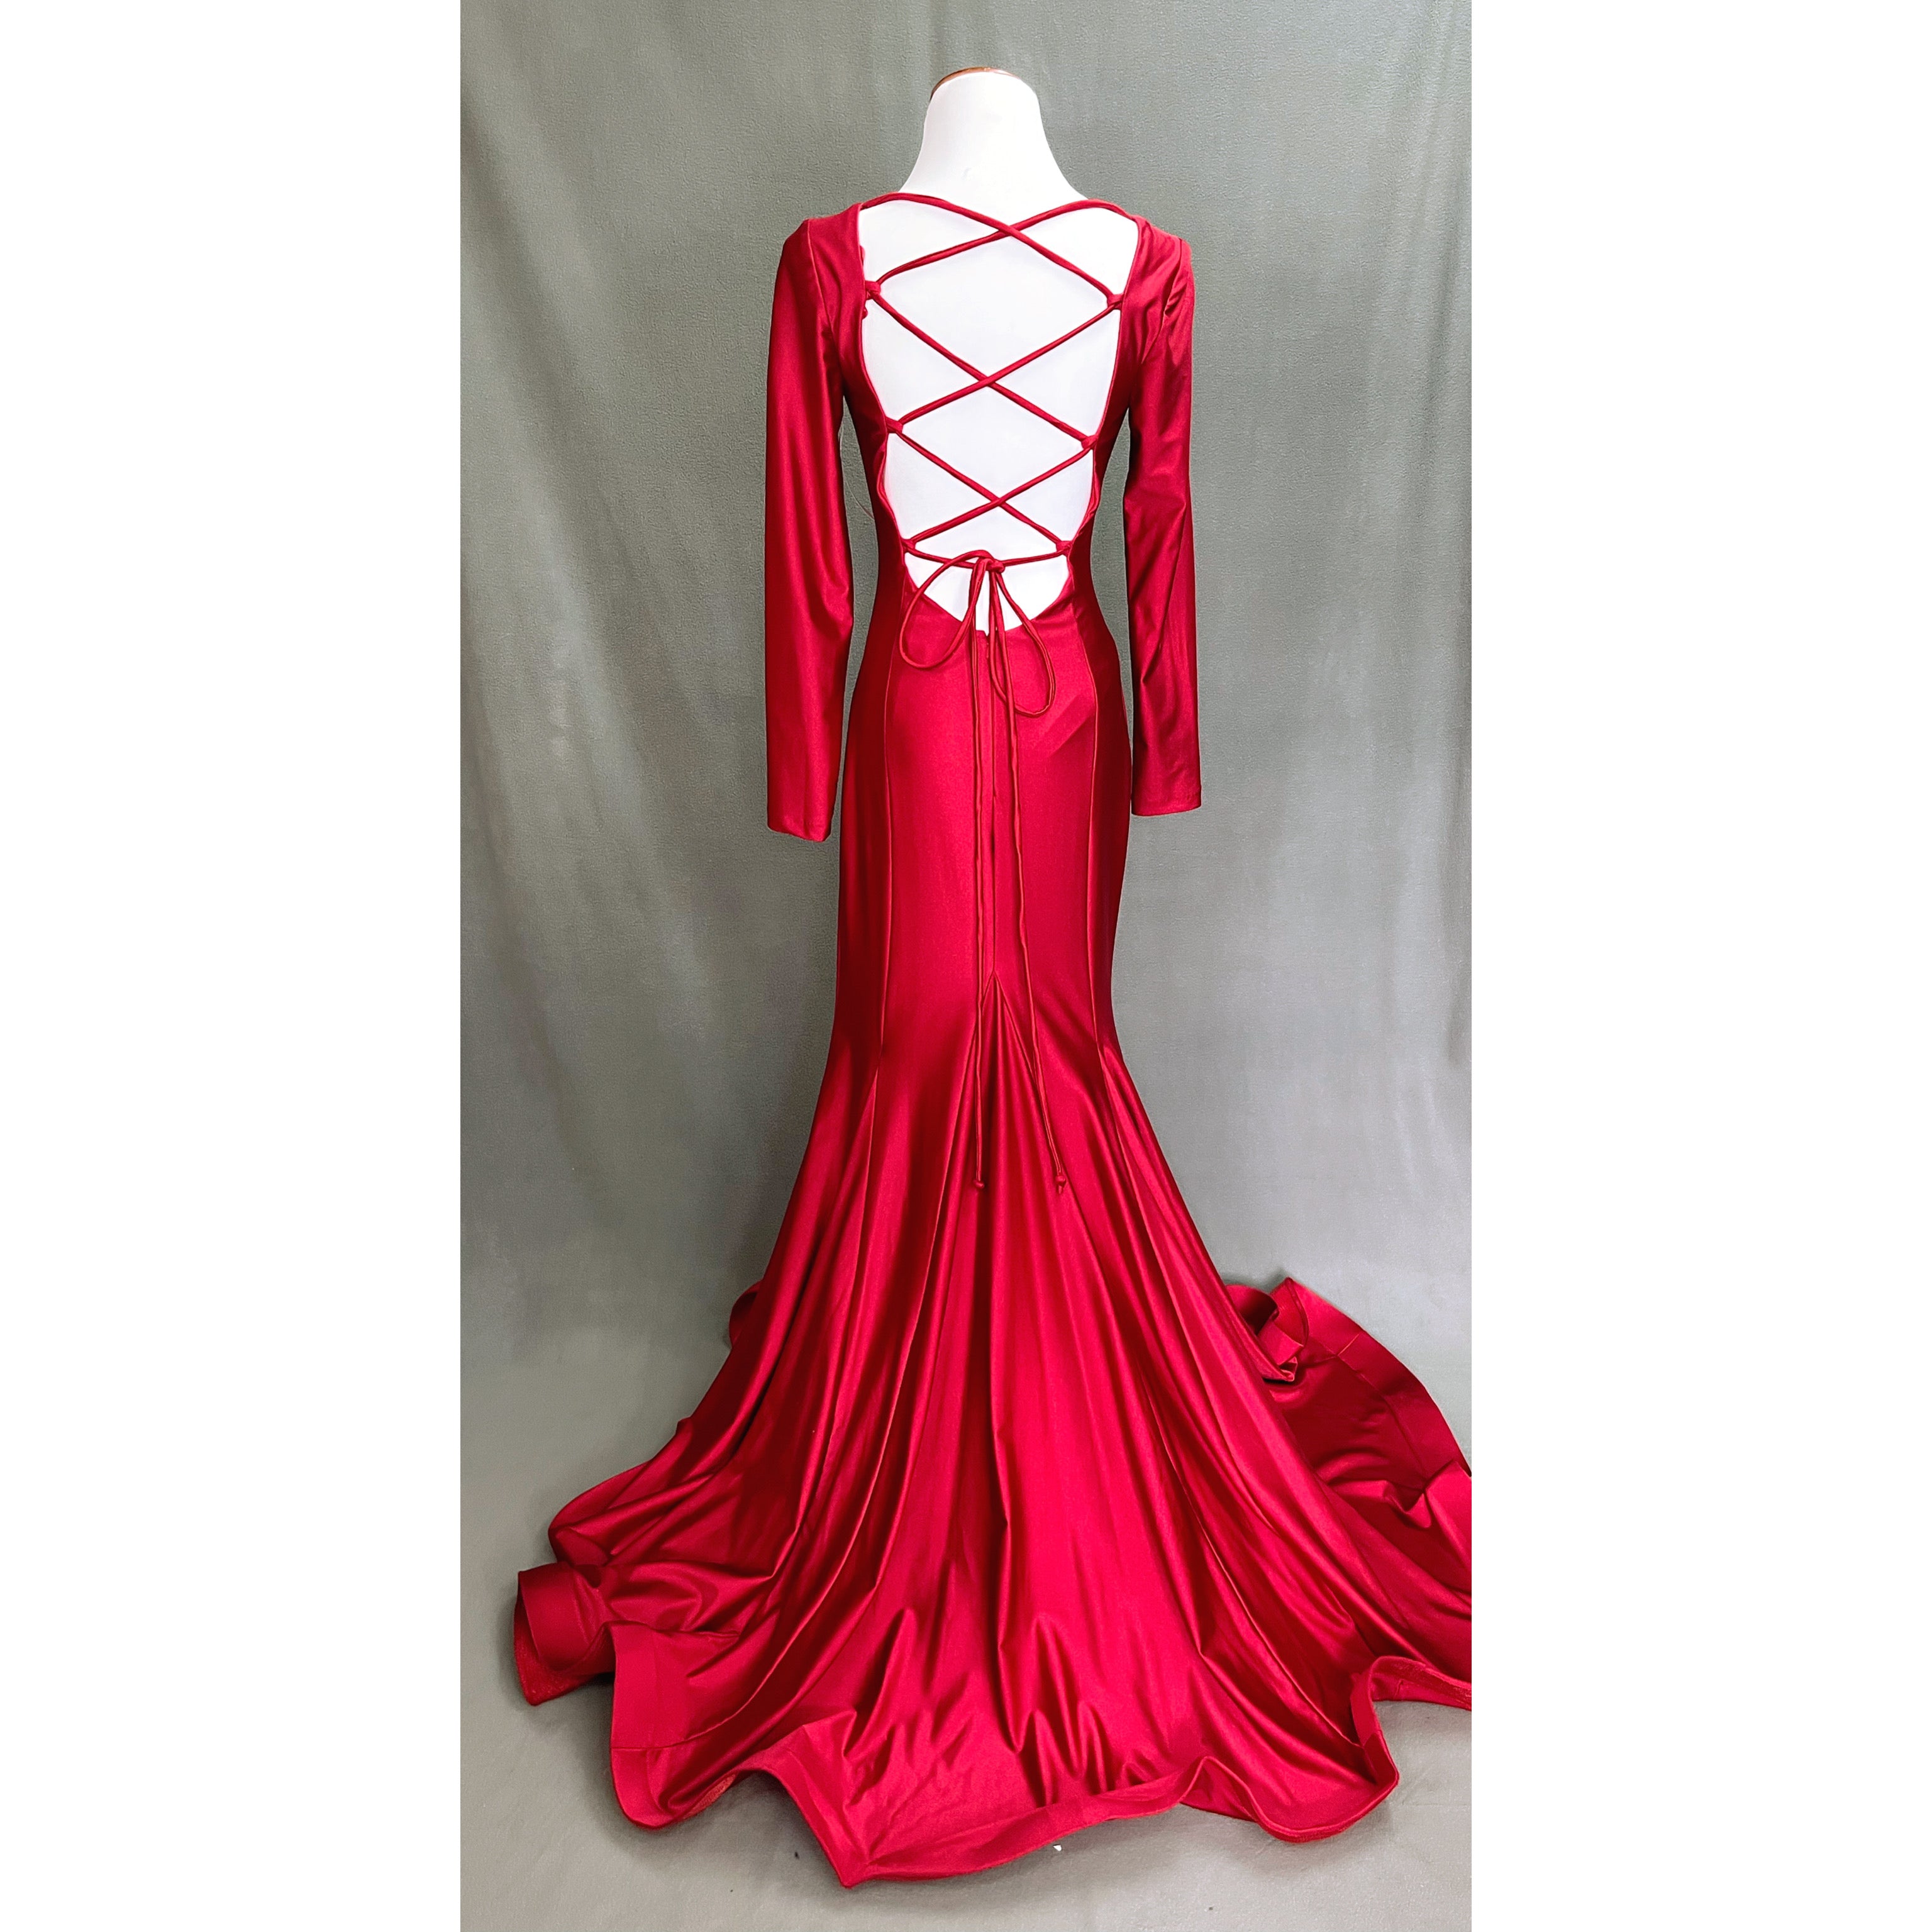 Blondie Nites red dress, size 5